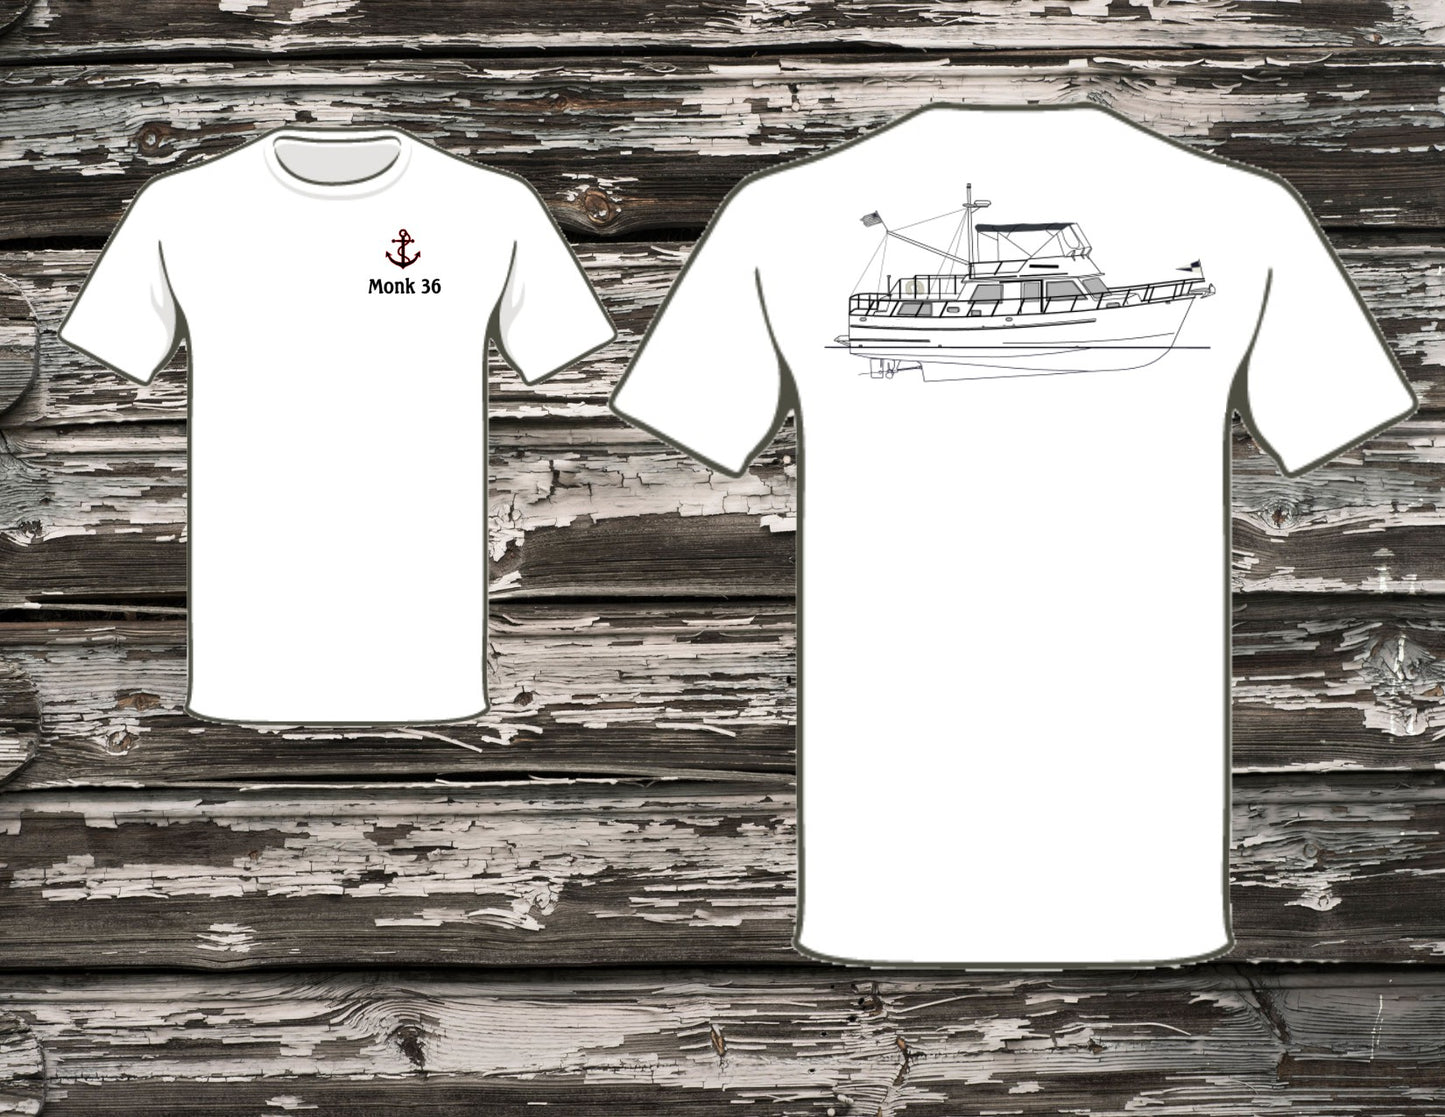 Monk 36 Trawler T-Shirt